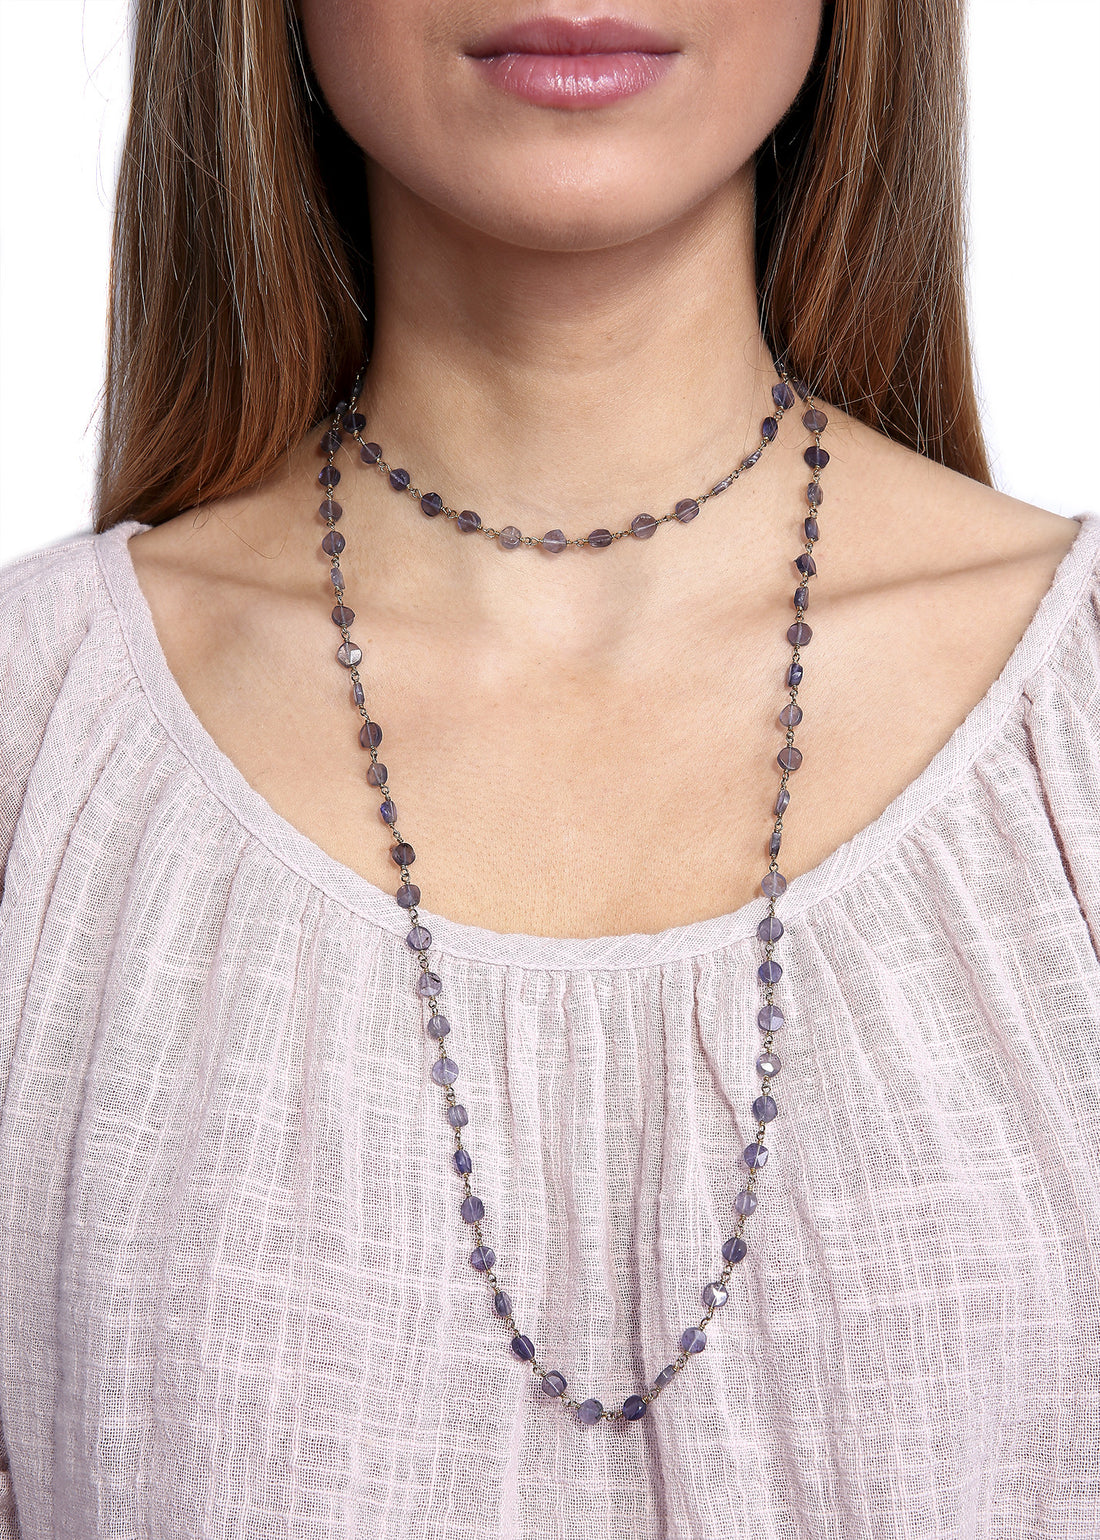 Ela Rae 'Diana' Labradorite Coin Chain Necklace - Jessimara